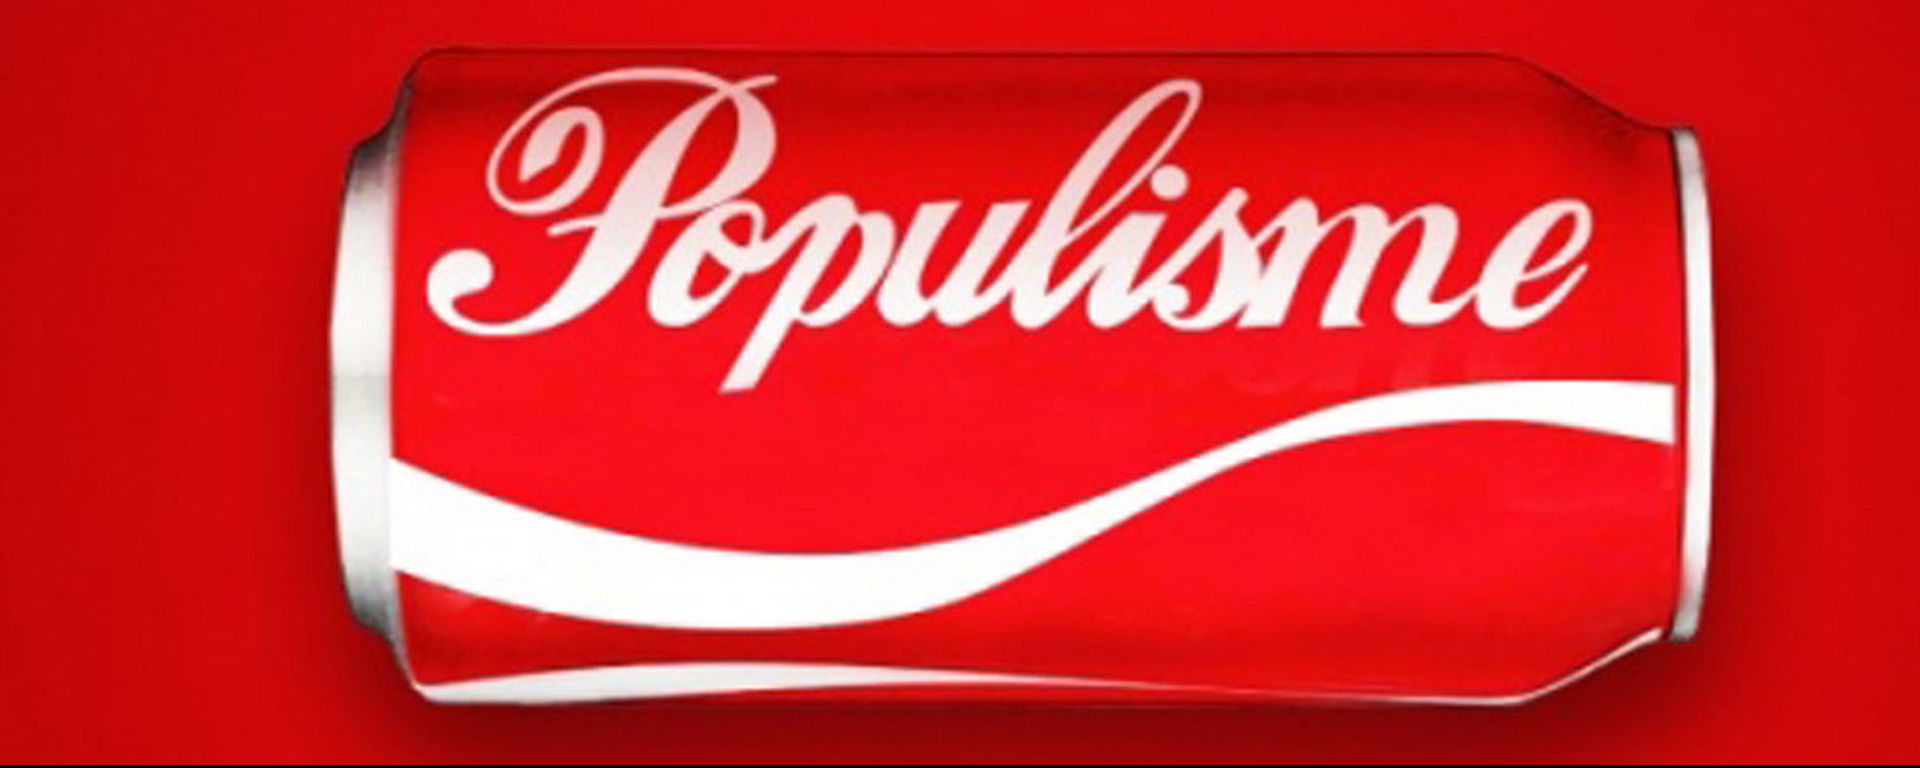 Populisme Coca-Cola